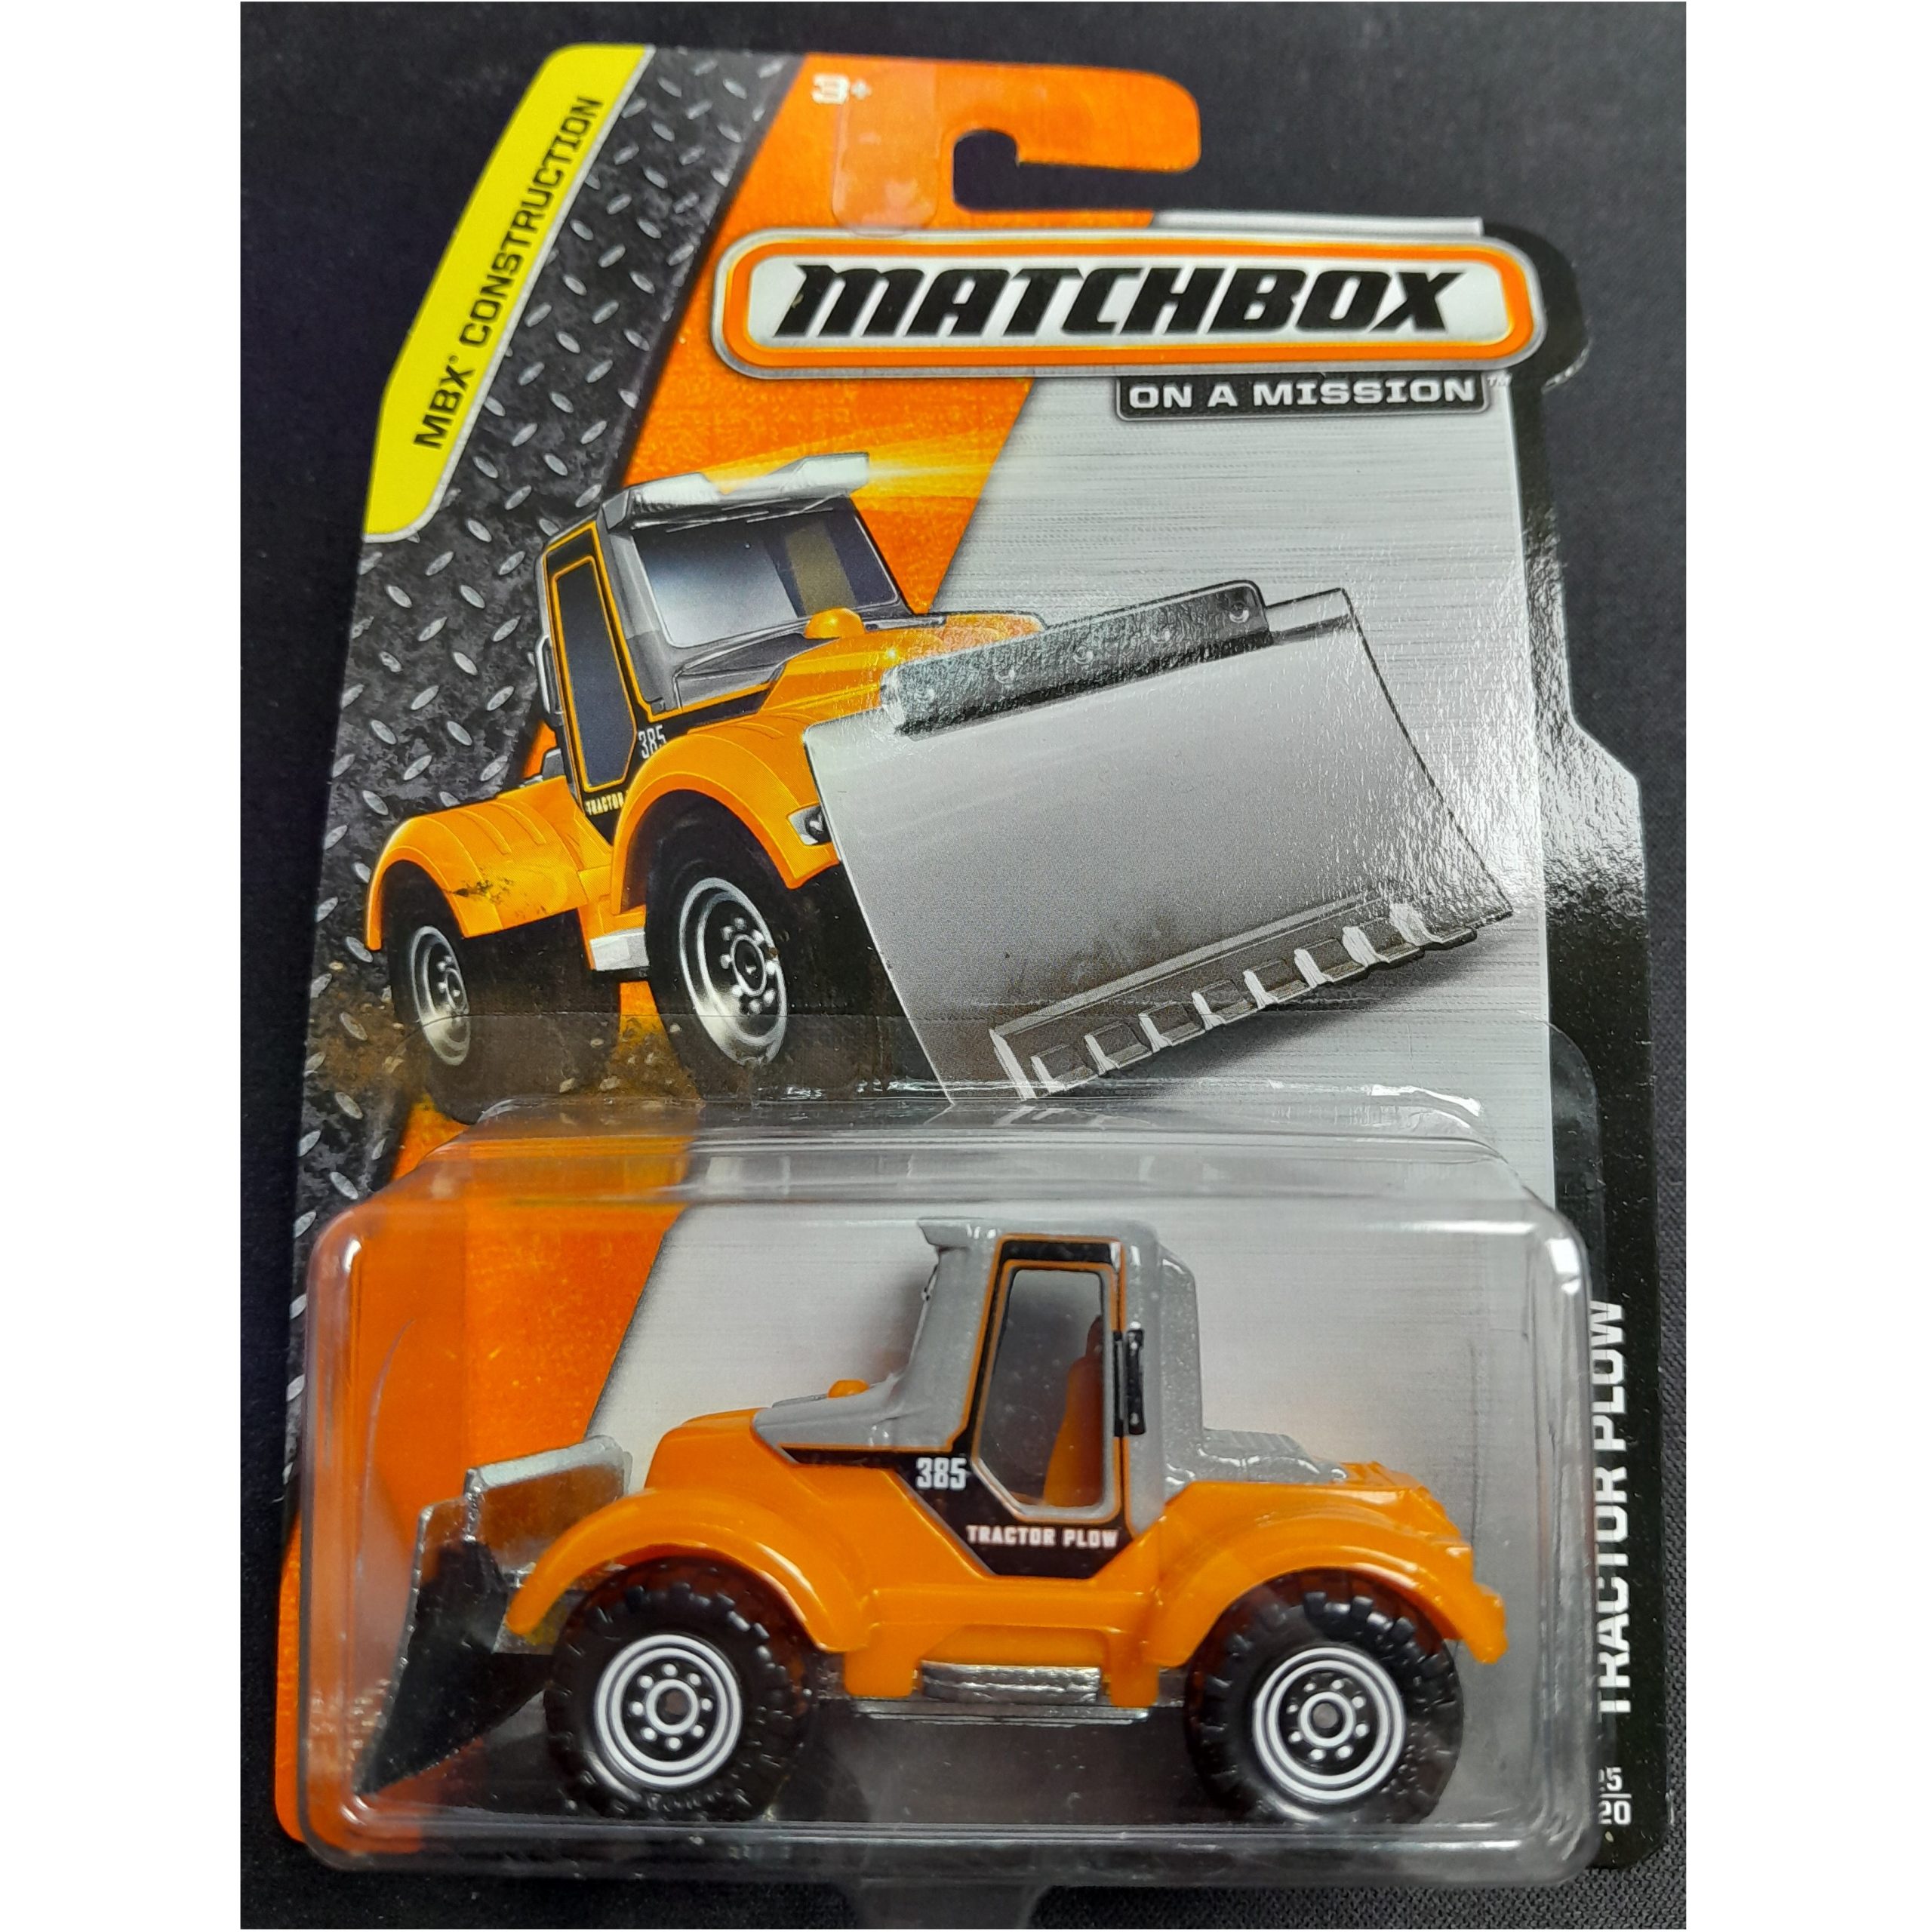 Matchbox MB950 : Tractor Plow